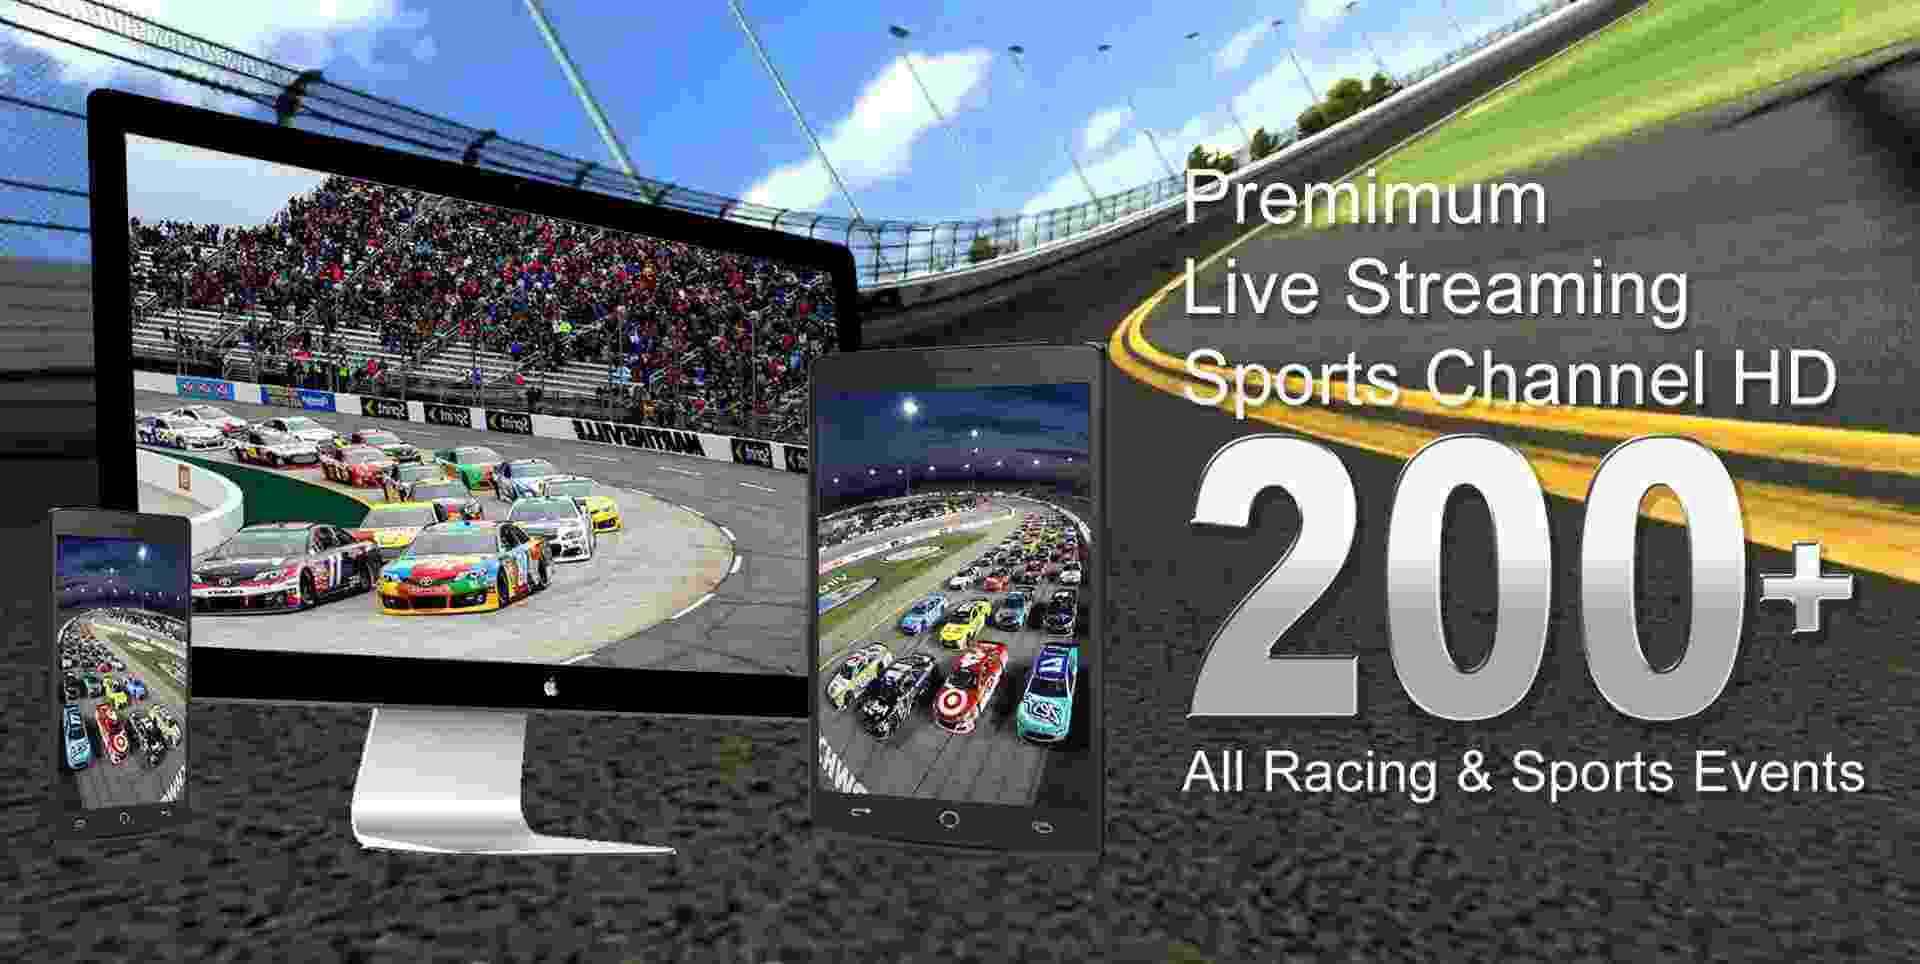 Sprint Cup Kansas Race 2015 Live Streaming